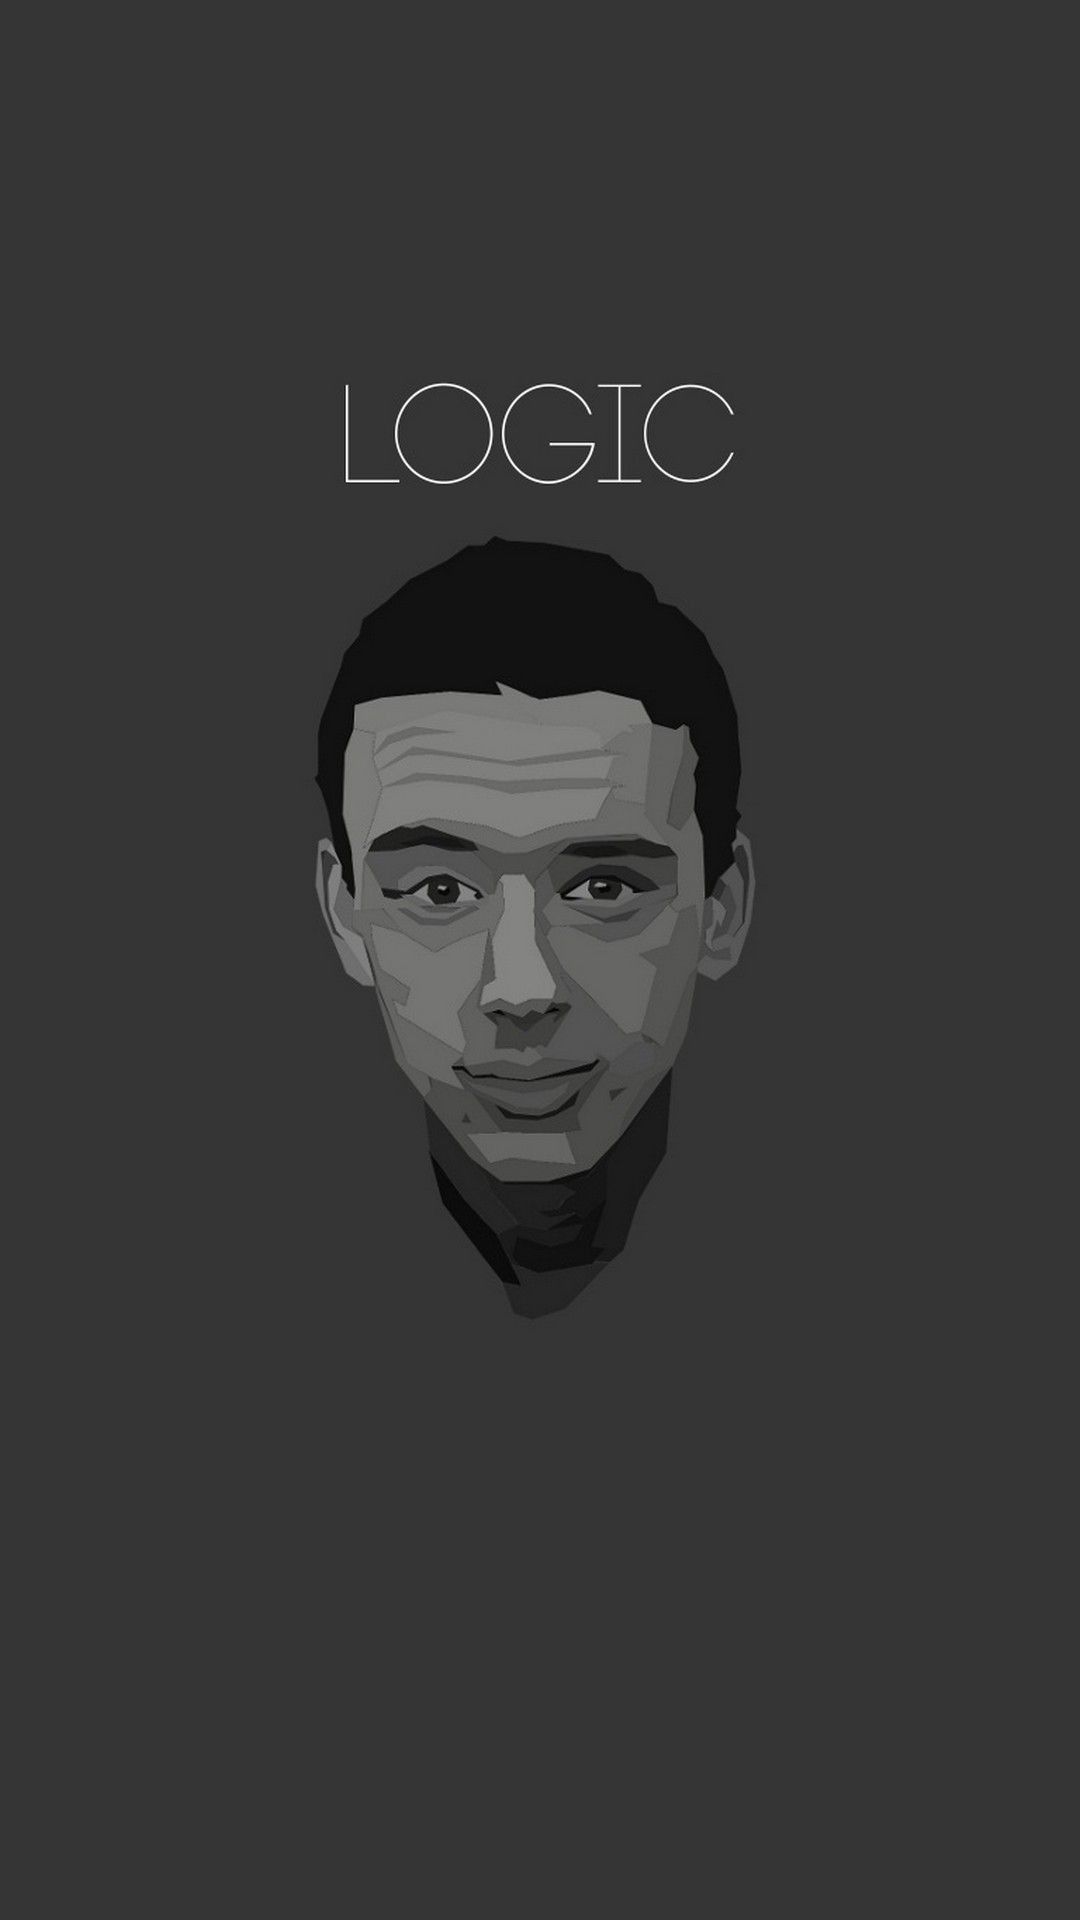 Logic Rapper Wallpaper